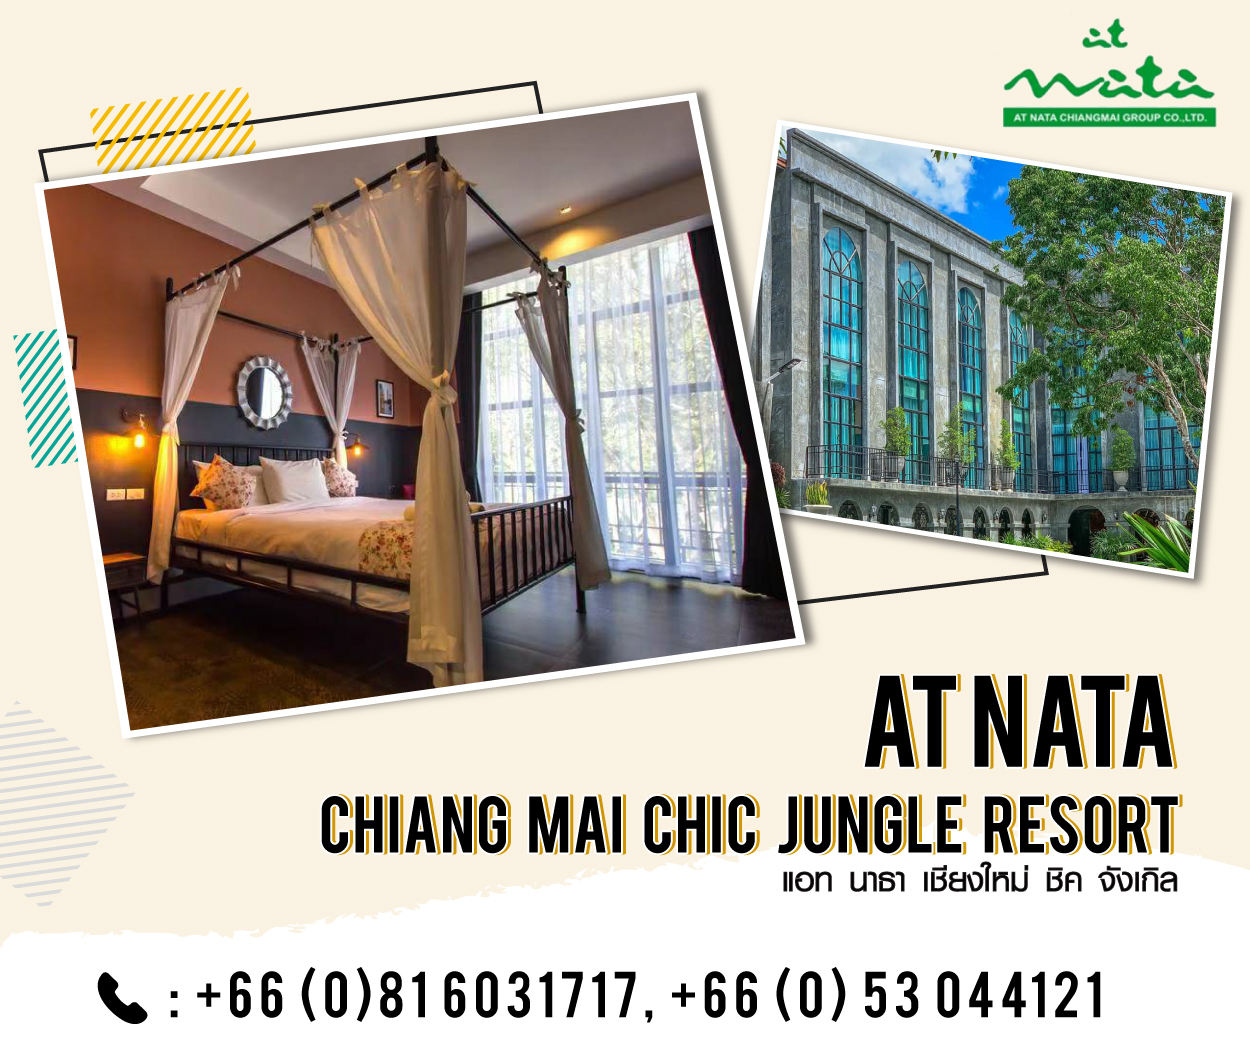 At Nata Chiangmai Chic Jungle Resort